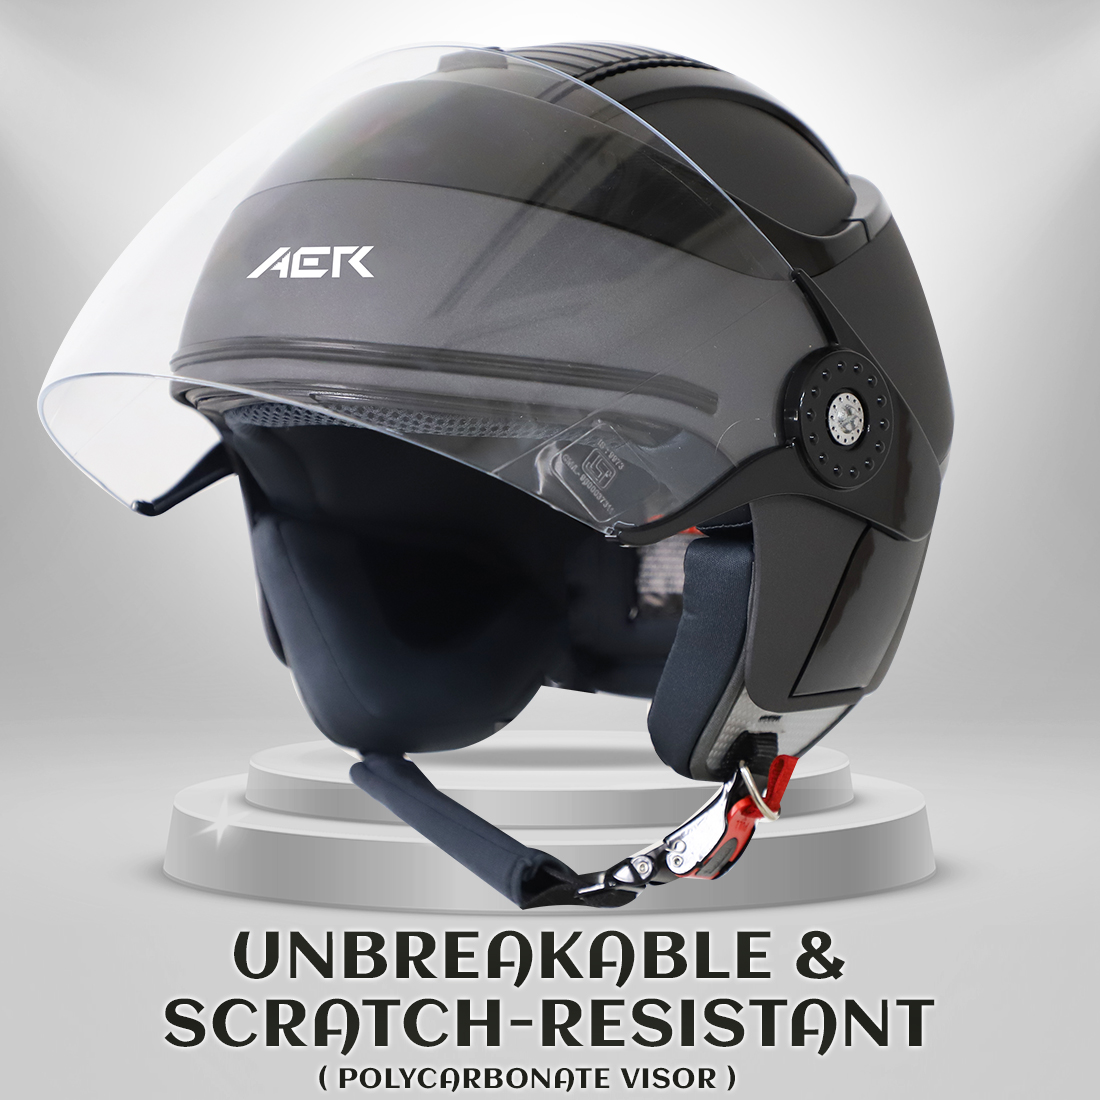 Steelbird SB-29 AER ISI Certified Helmet For Men And Women (Matt H.Grey Black With Clear Visor)